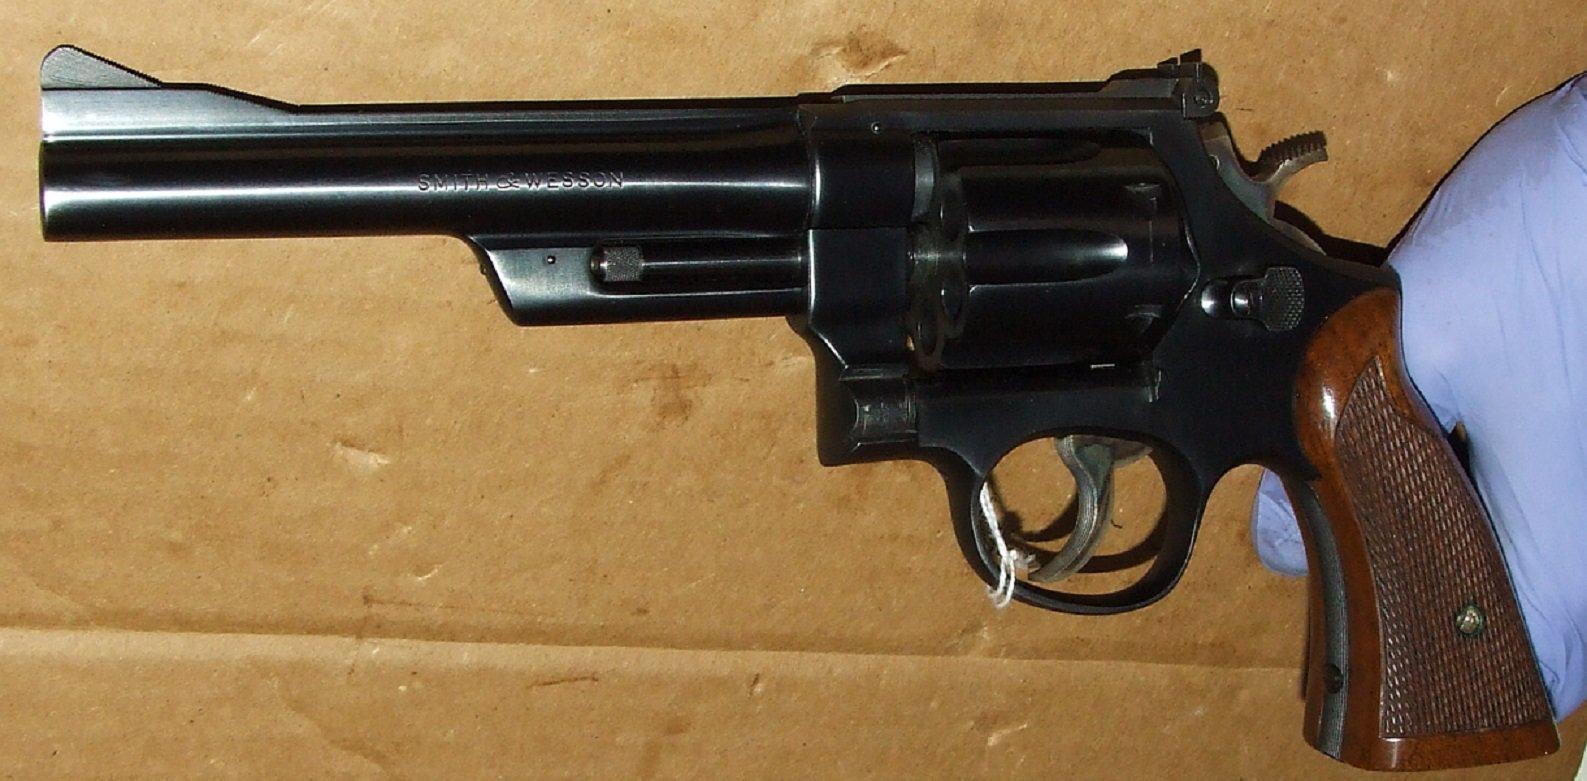 Smith & Wesson Mod 28 (no dash) 357 Mag revolver